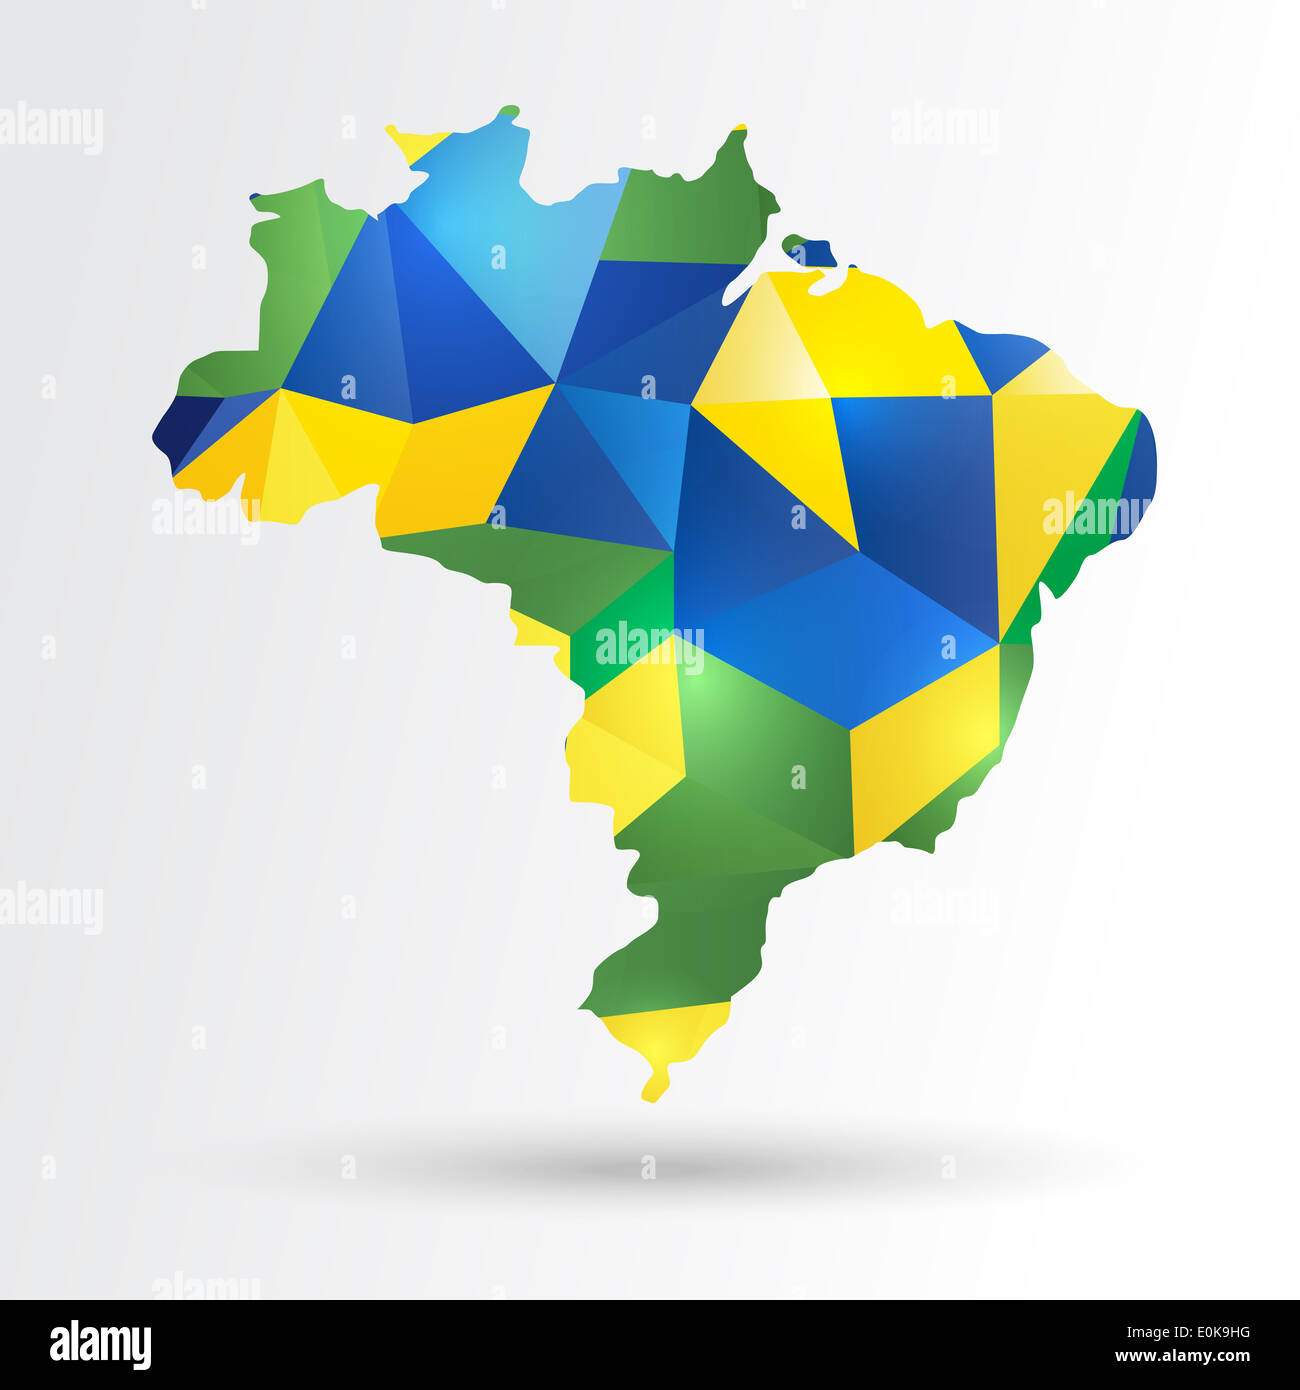 Resumen colorido Mapa de Brasil. EPS10 vector con transparencia organizados en capas para facilitar su edición. Foto de stock